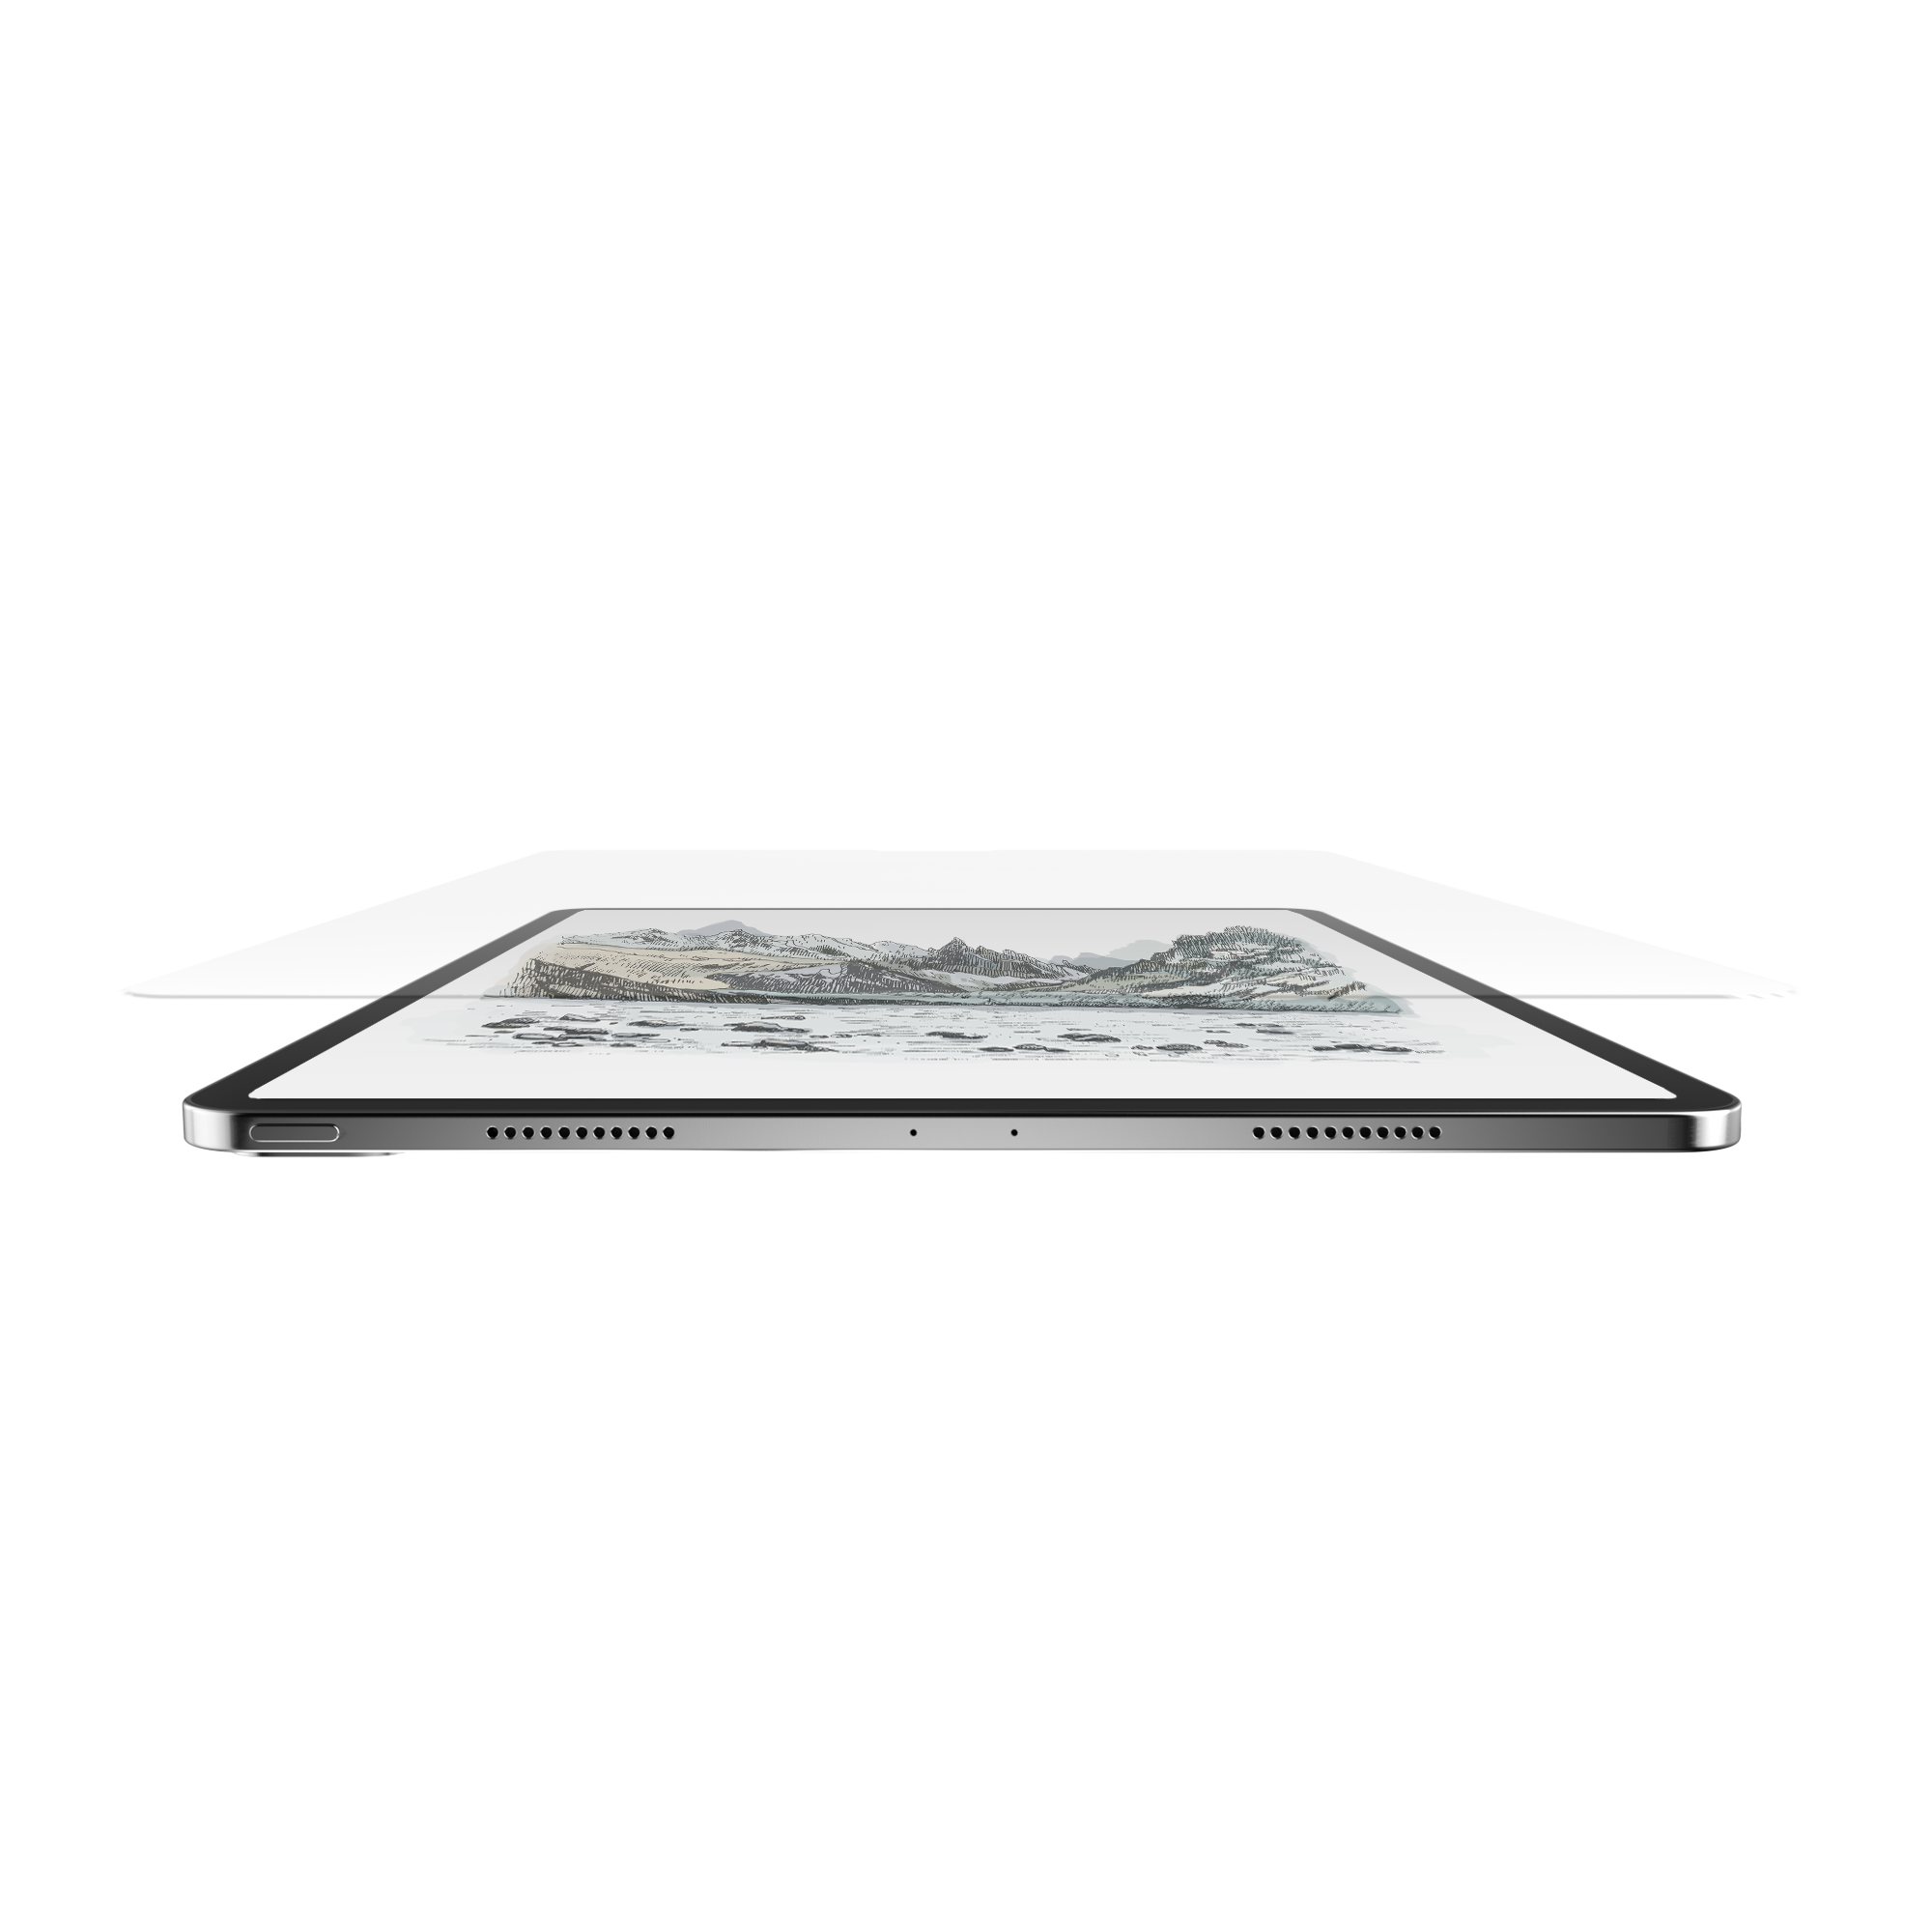 MagEasy EasyPaper Pro For 2022-2018 iPad Pro 11" & 2022-2020 iPad Air 10.9", Transparent